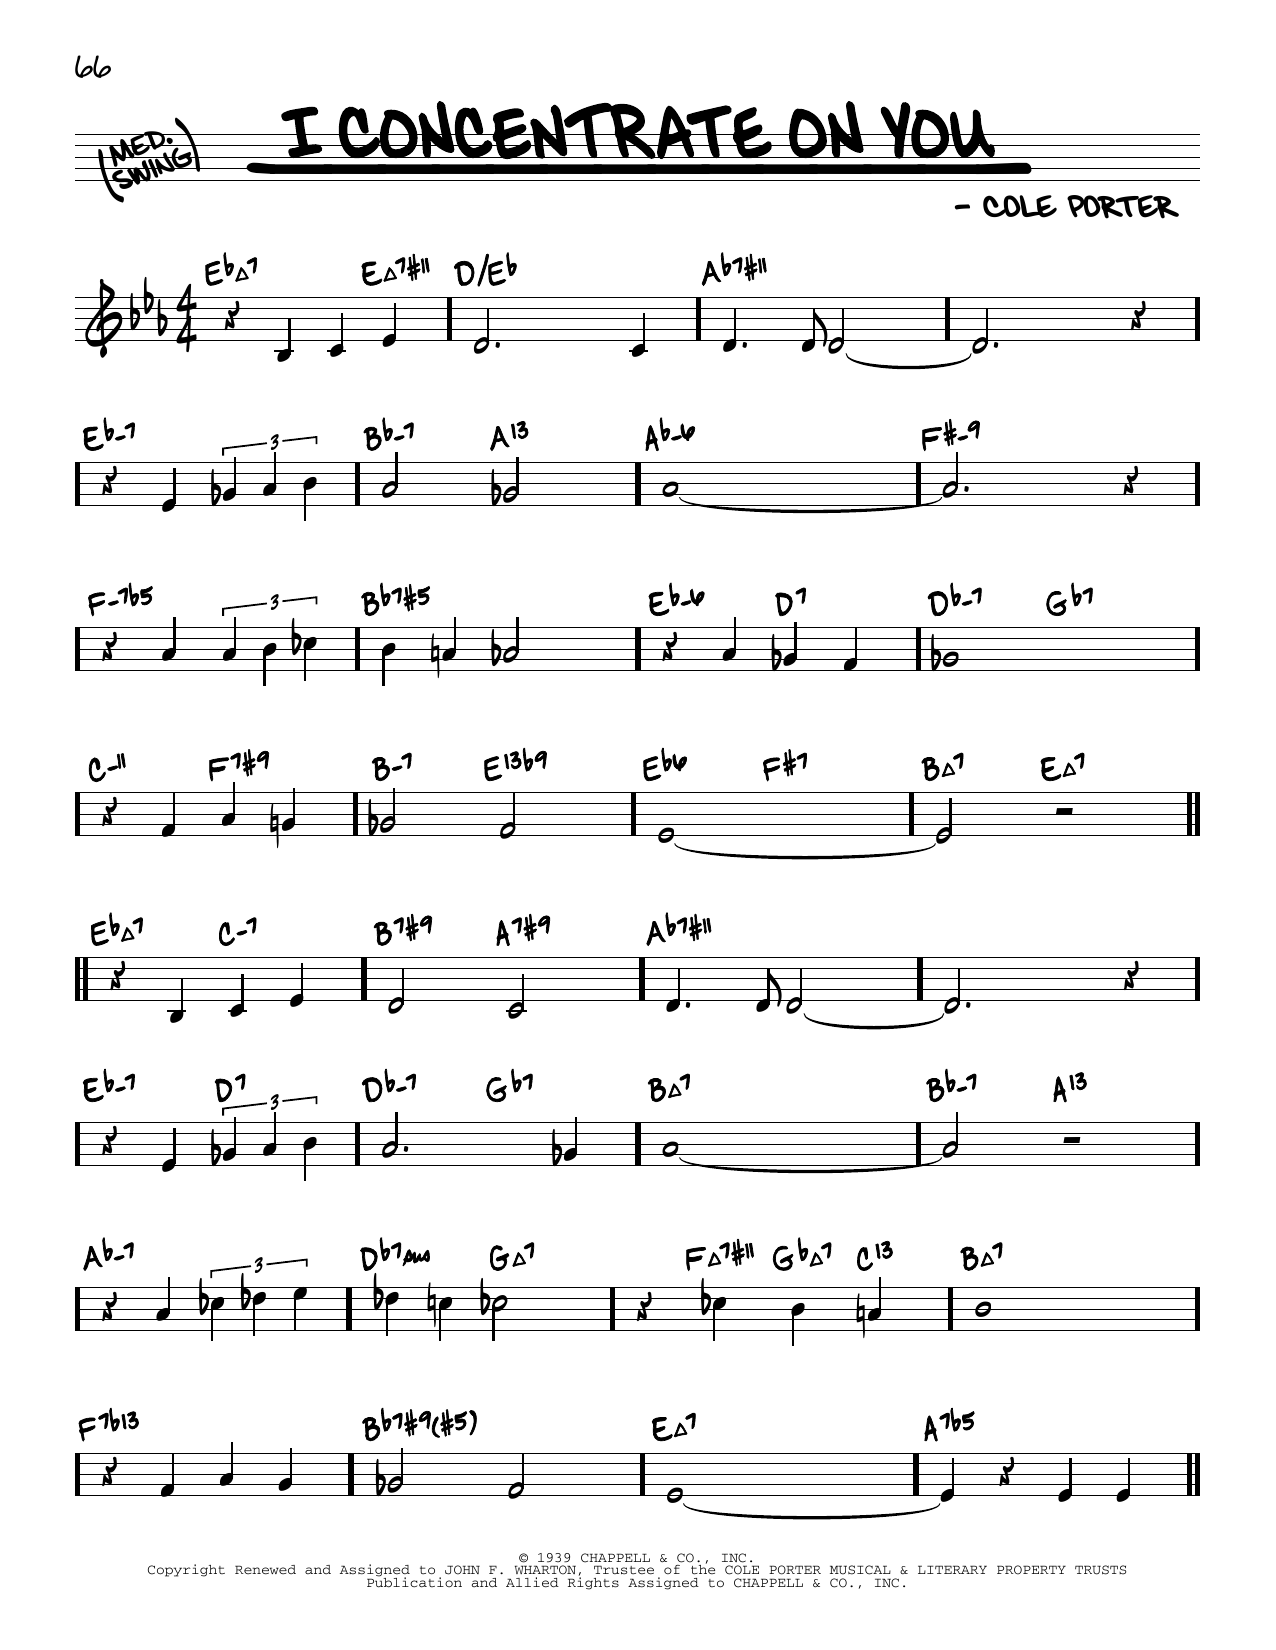 Cole Porter I Concentrate On You (arr. David Hazeltine) Sheet Music Notes & Chords for Real Book – Enhanced Chords - Download or Print PDF